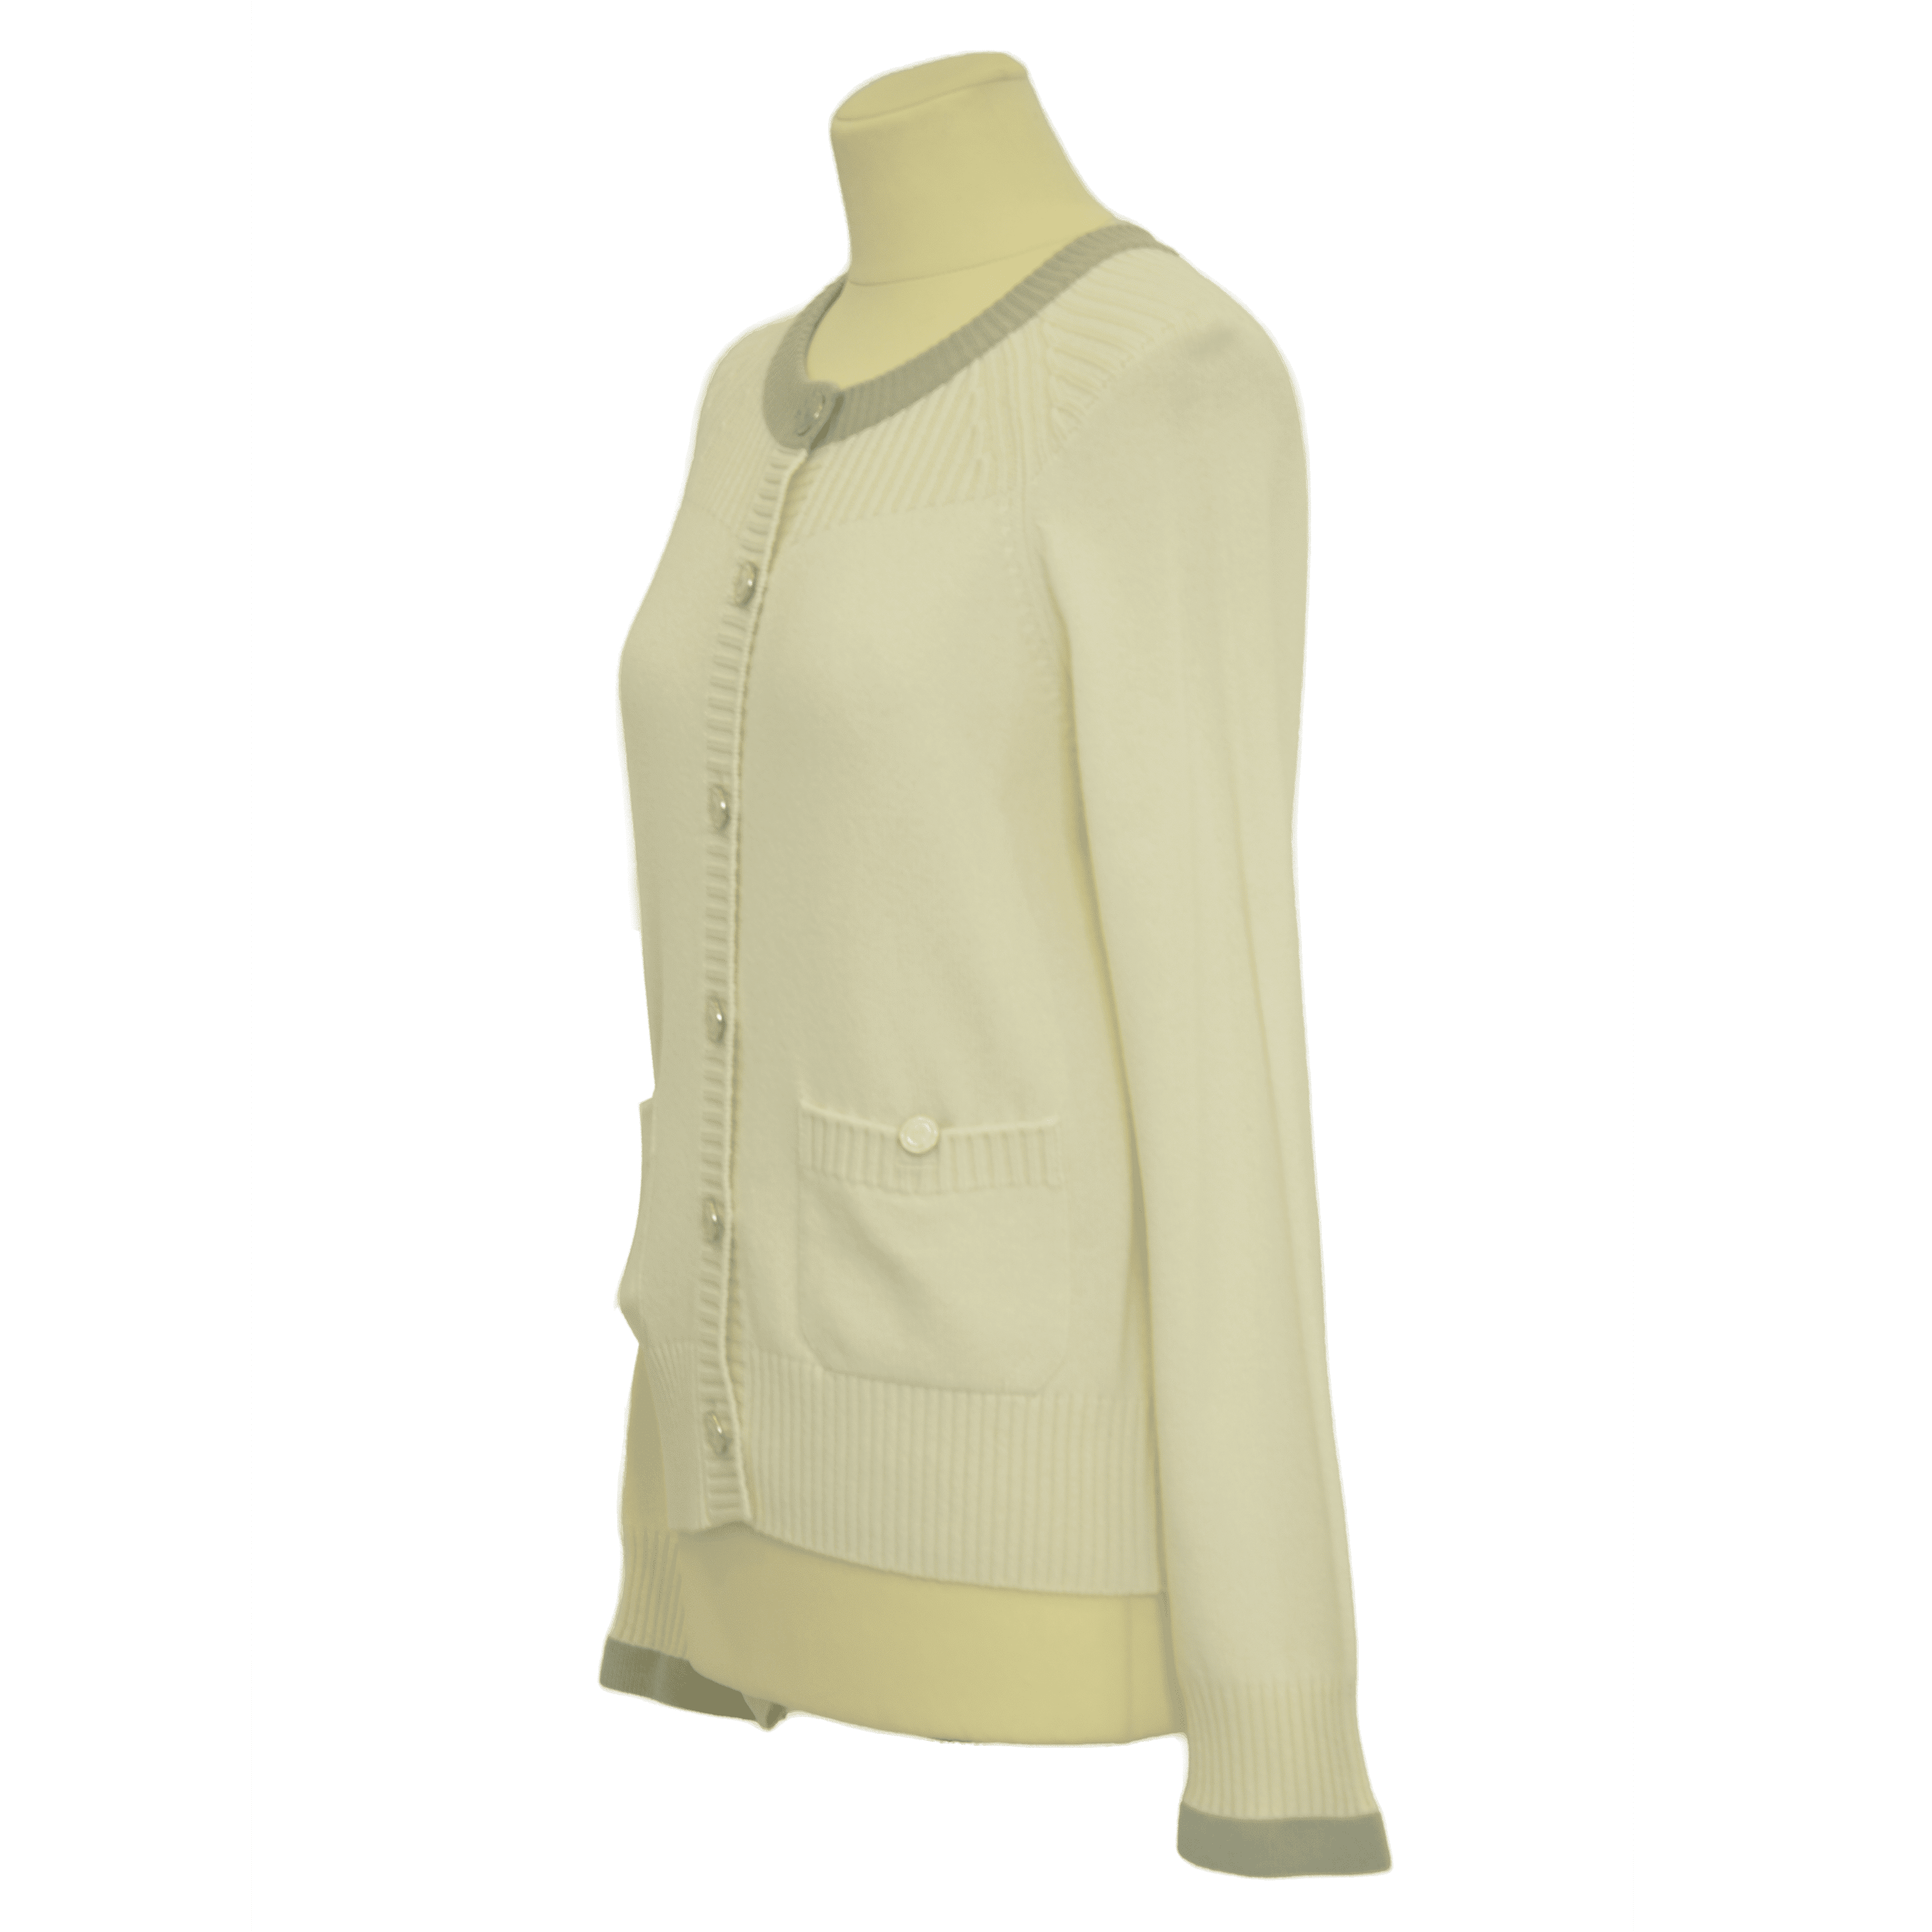 Ivory/Gray Trim Enamel Button Sweater Cardigan